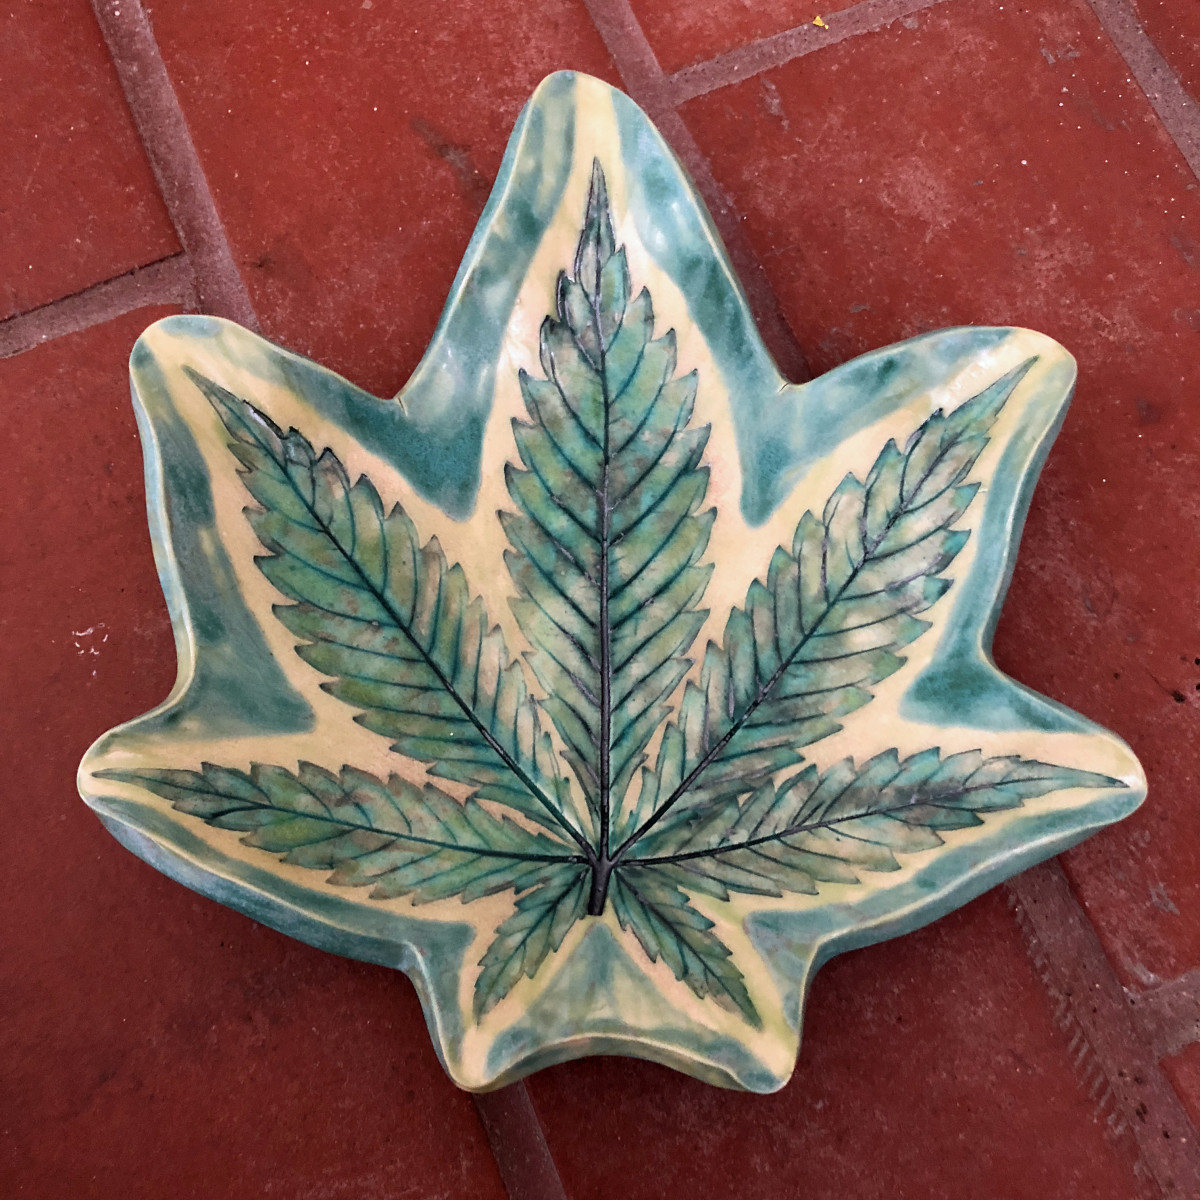 Wild Emerald Leaf tray by Nell Eakin 